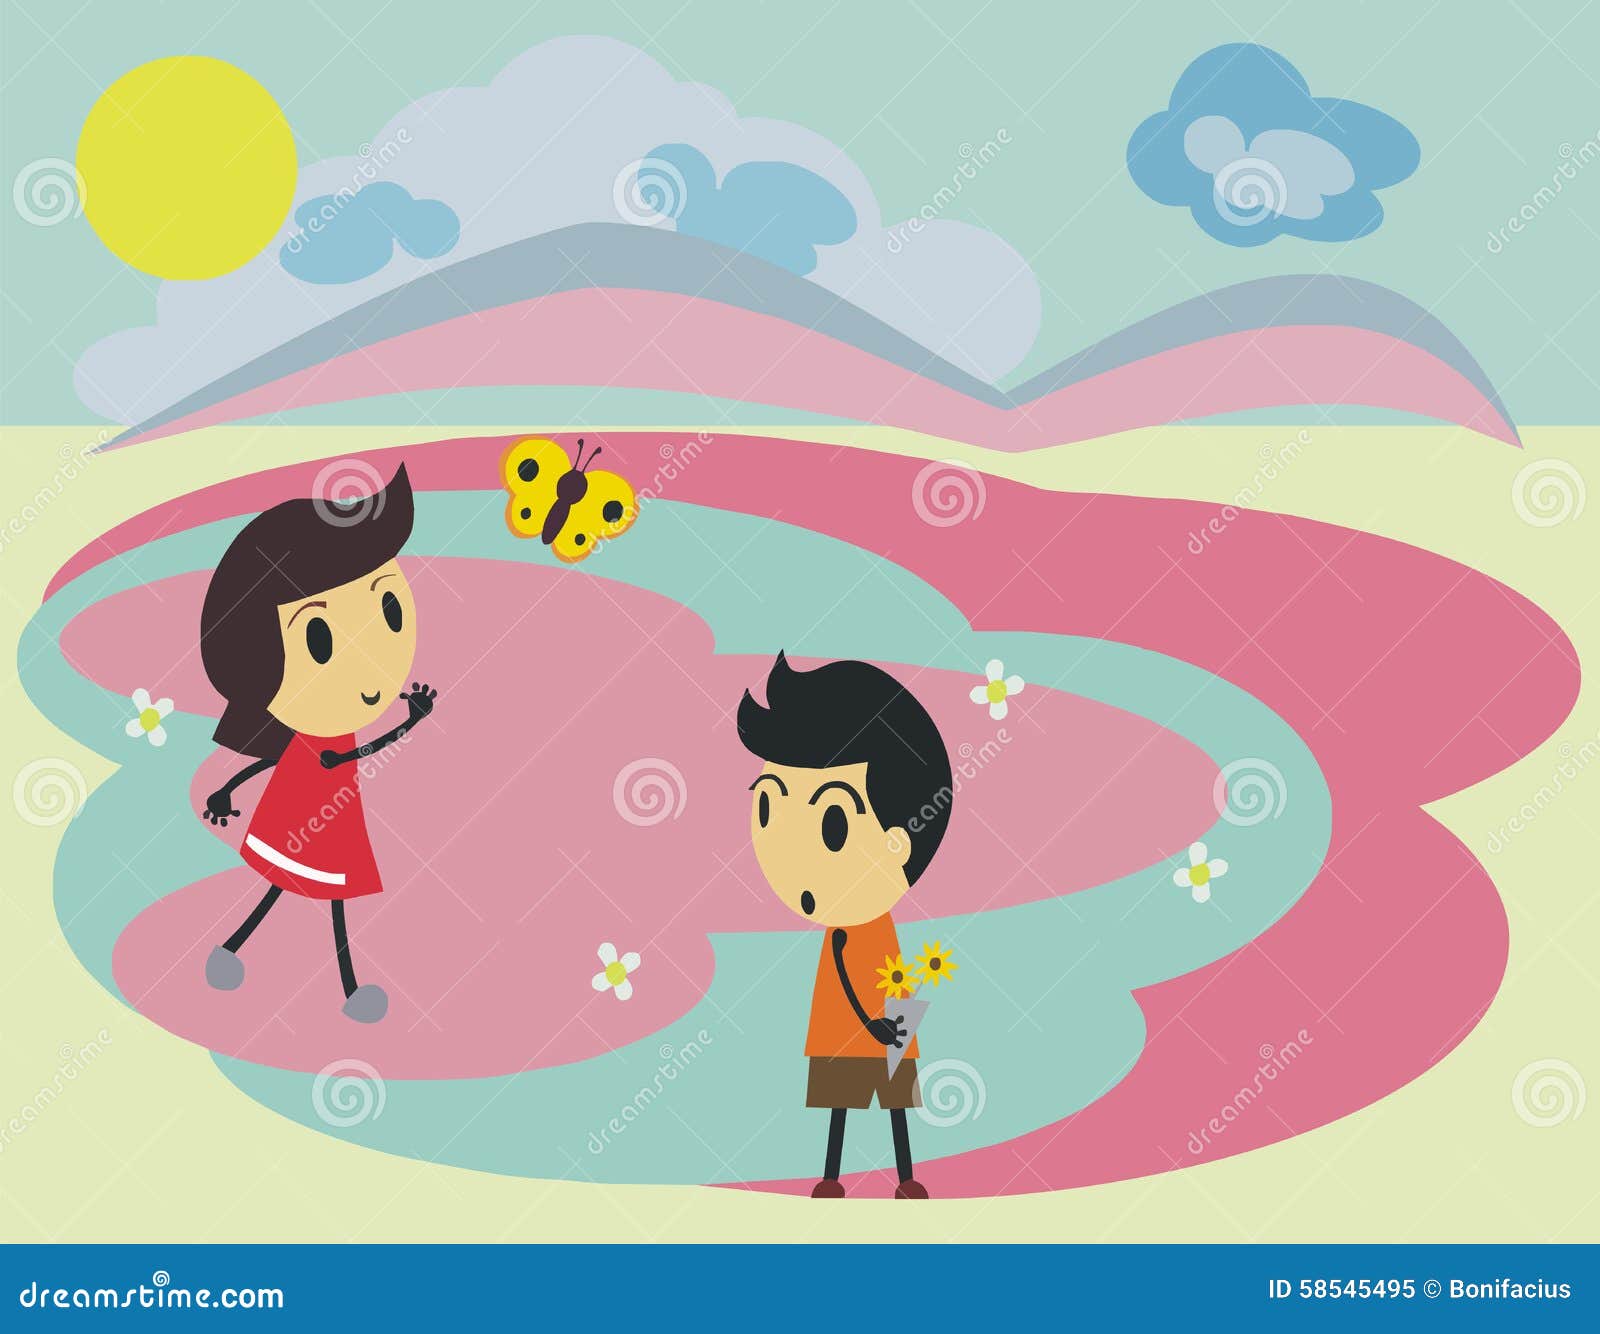 Love Story 2 cartoon stock vector. Illustration of animation - 58545495